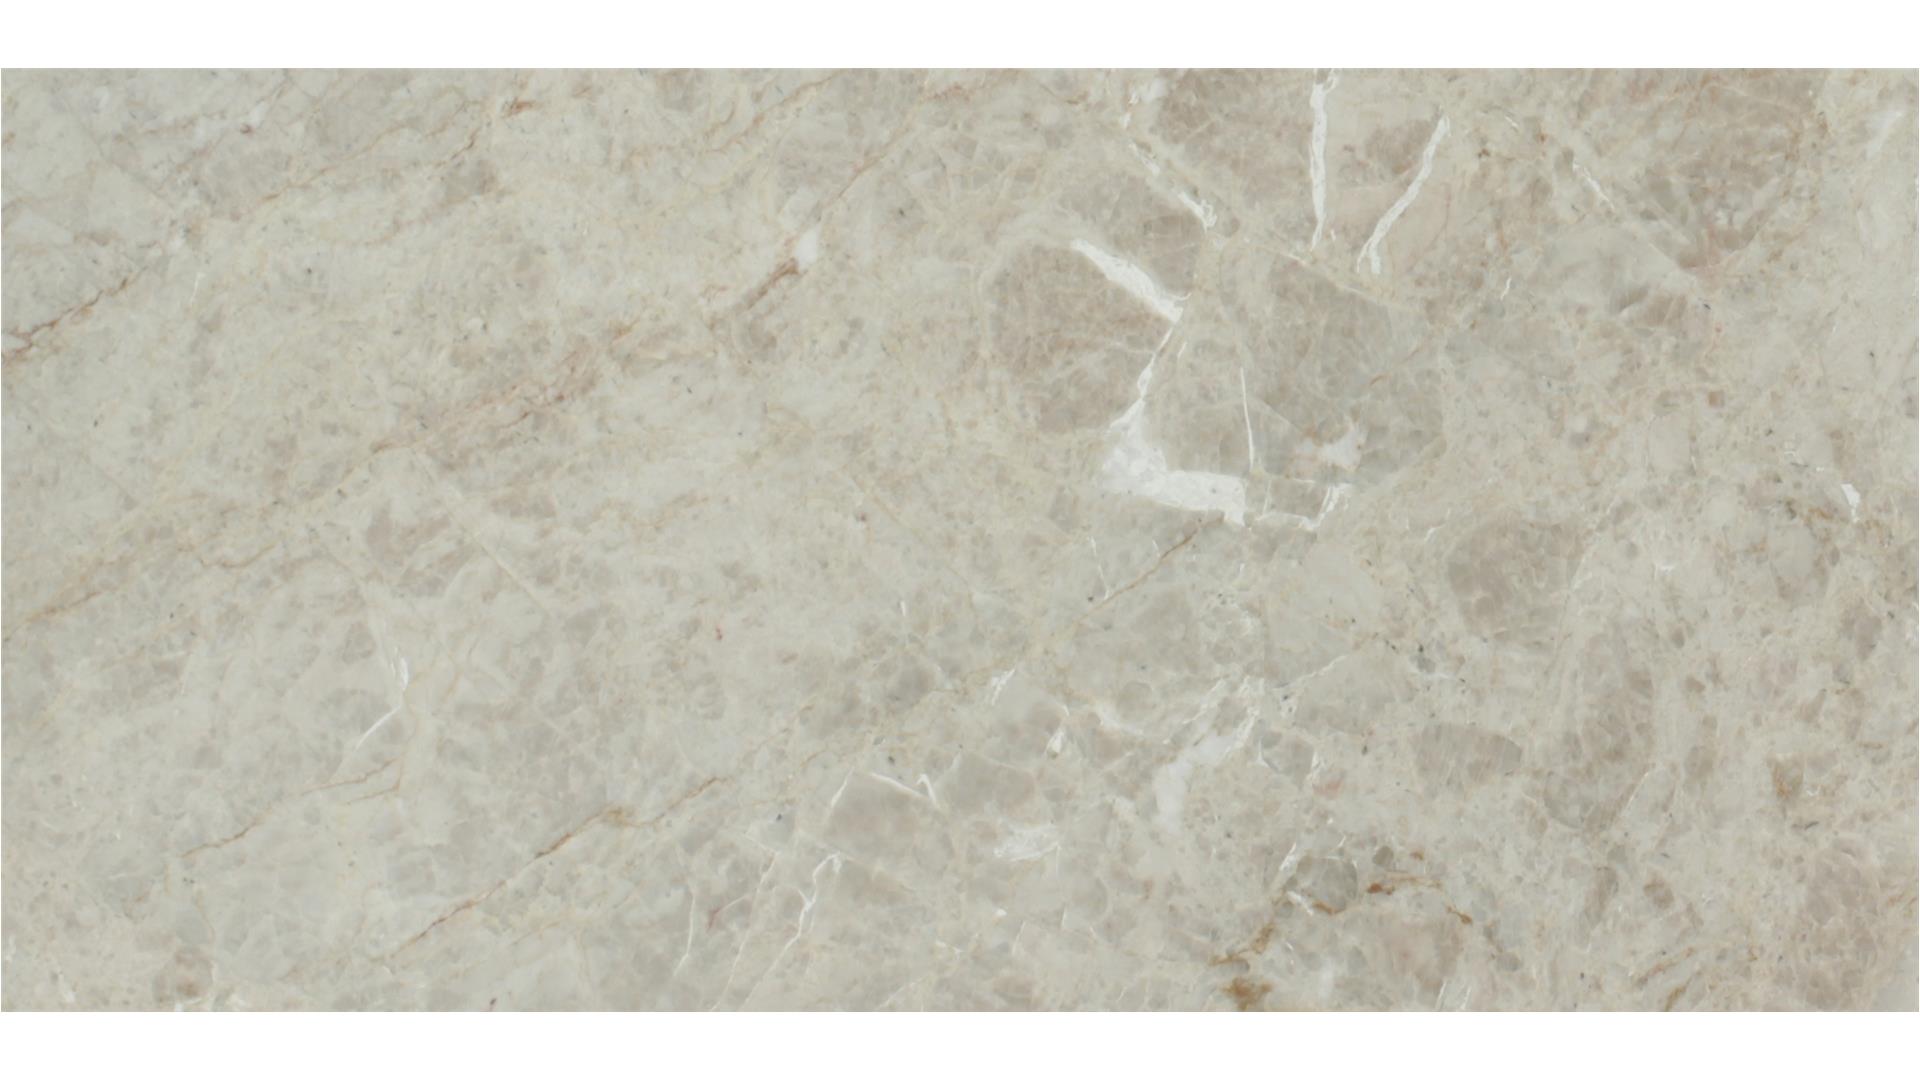 Savoie Quartzite 3 cm DalTile Natural Stone Slabs